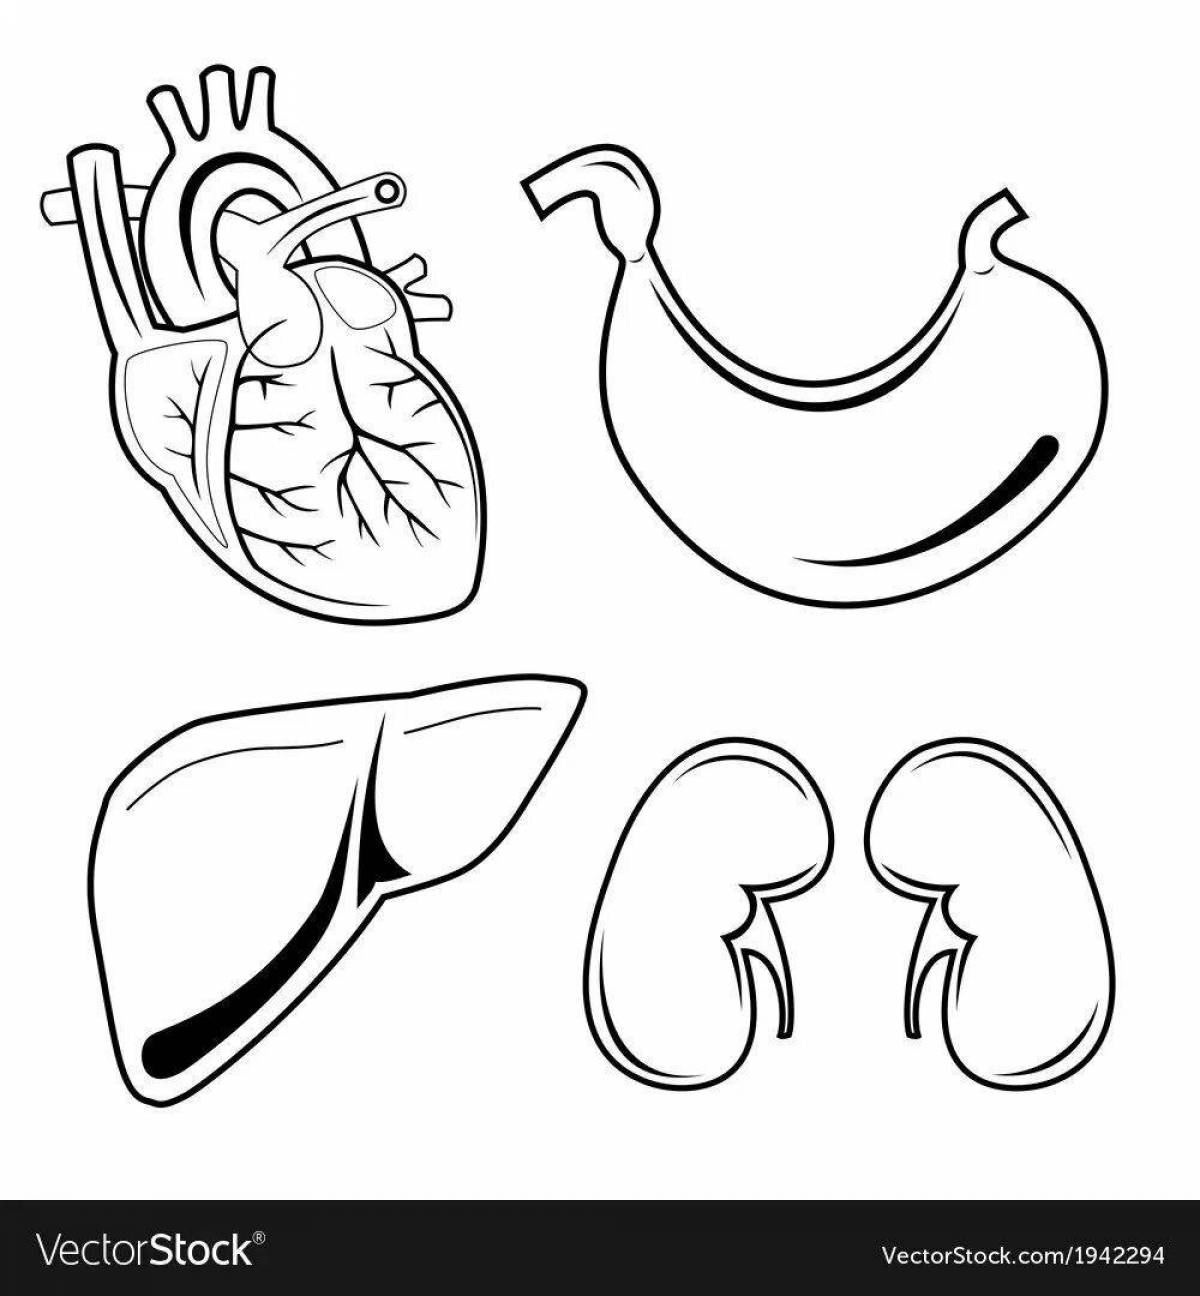 Human organs for children #1